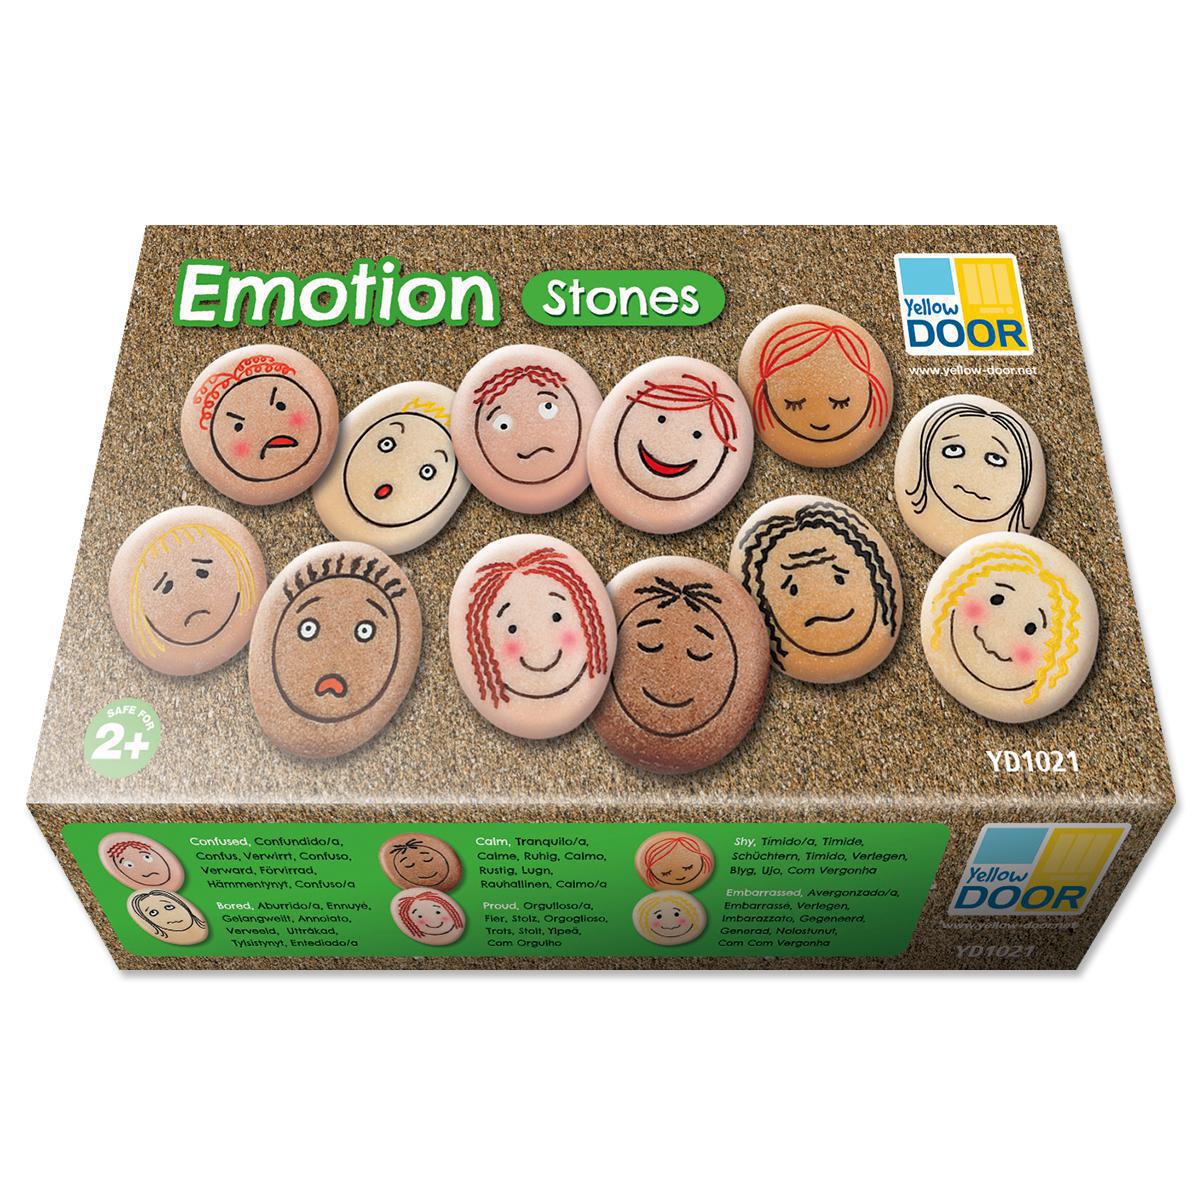  Emotion Stones 